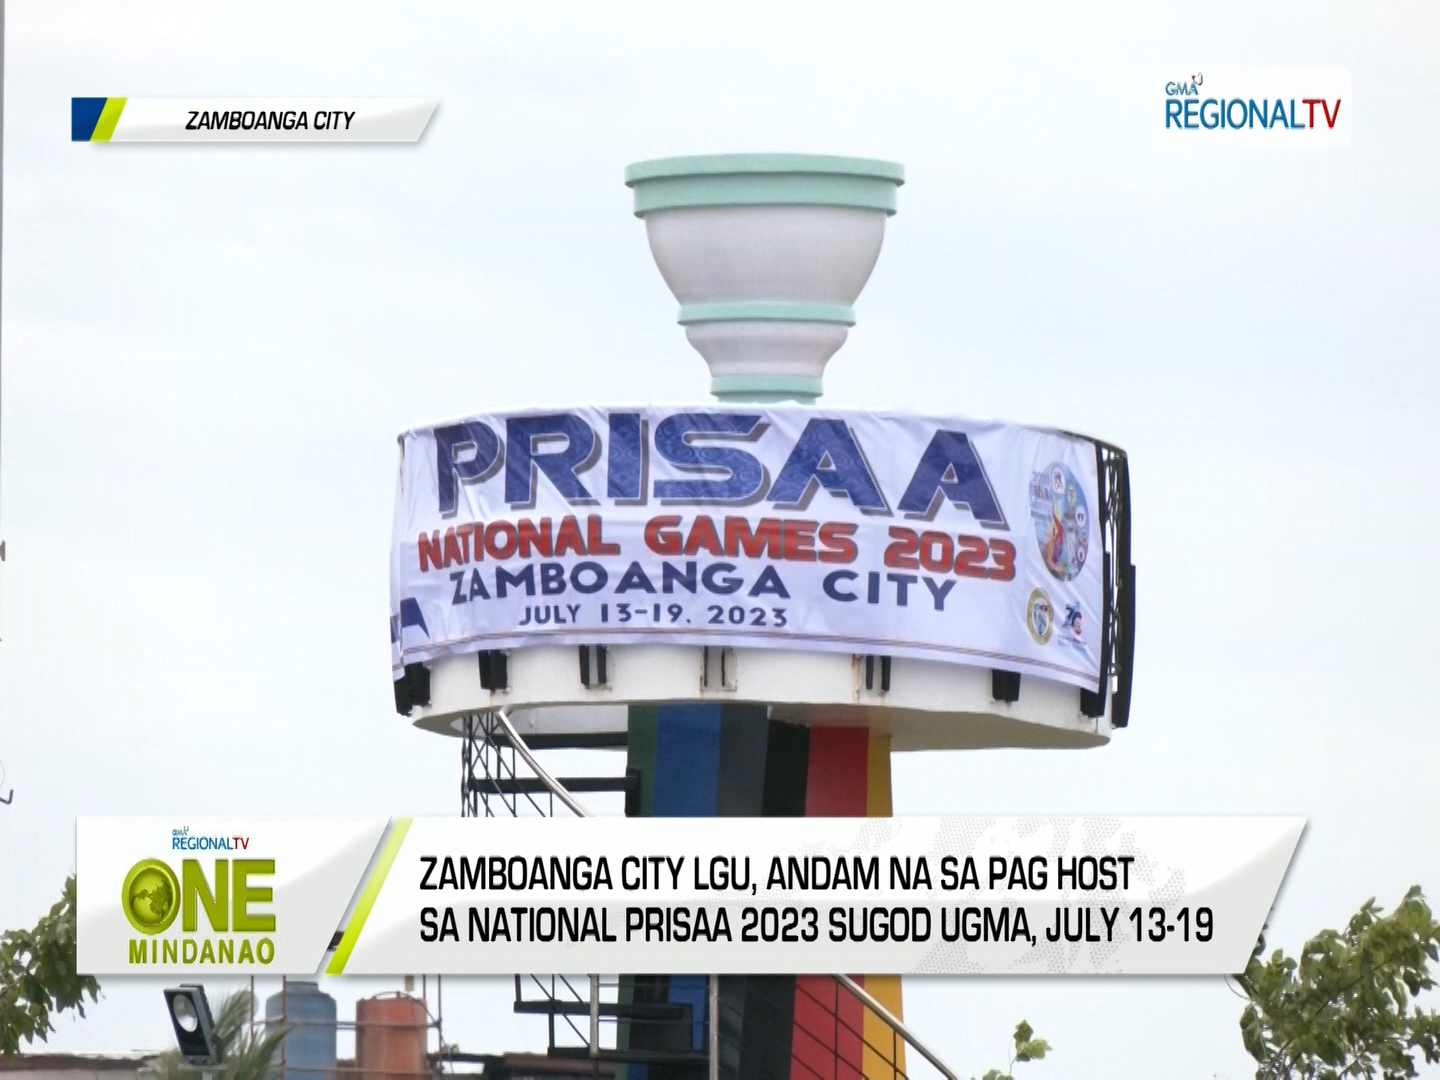 one-mindanao-game-on-one-mindanao-gma-regional-tv-online-home-of-philippine-regional